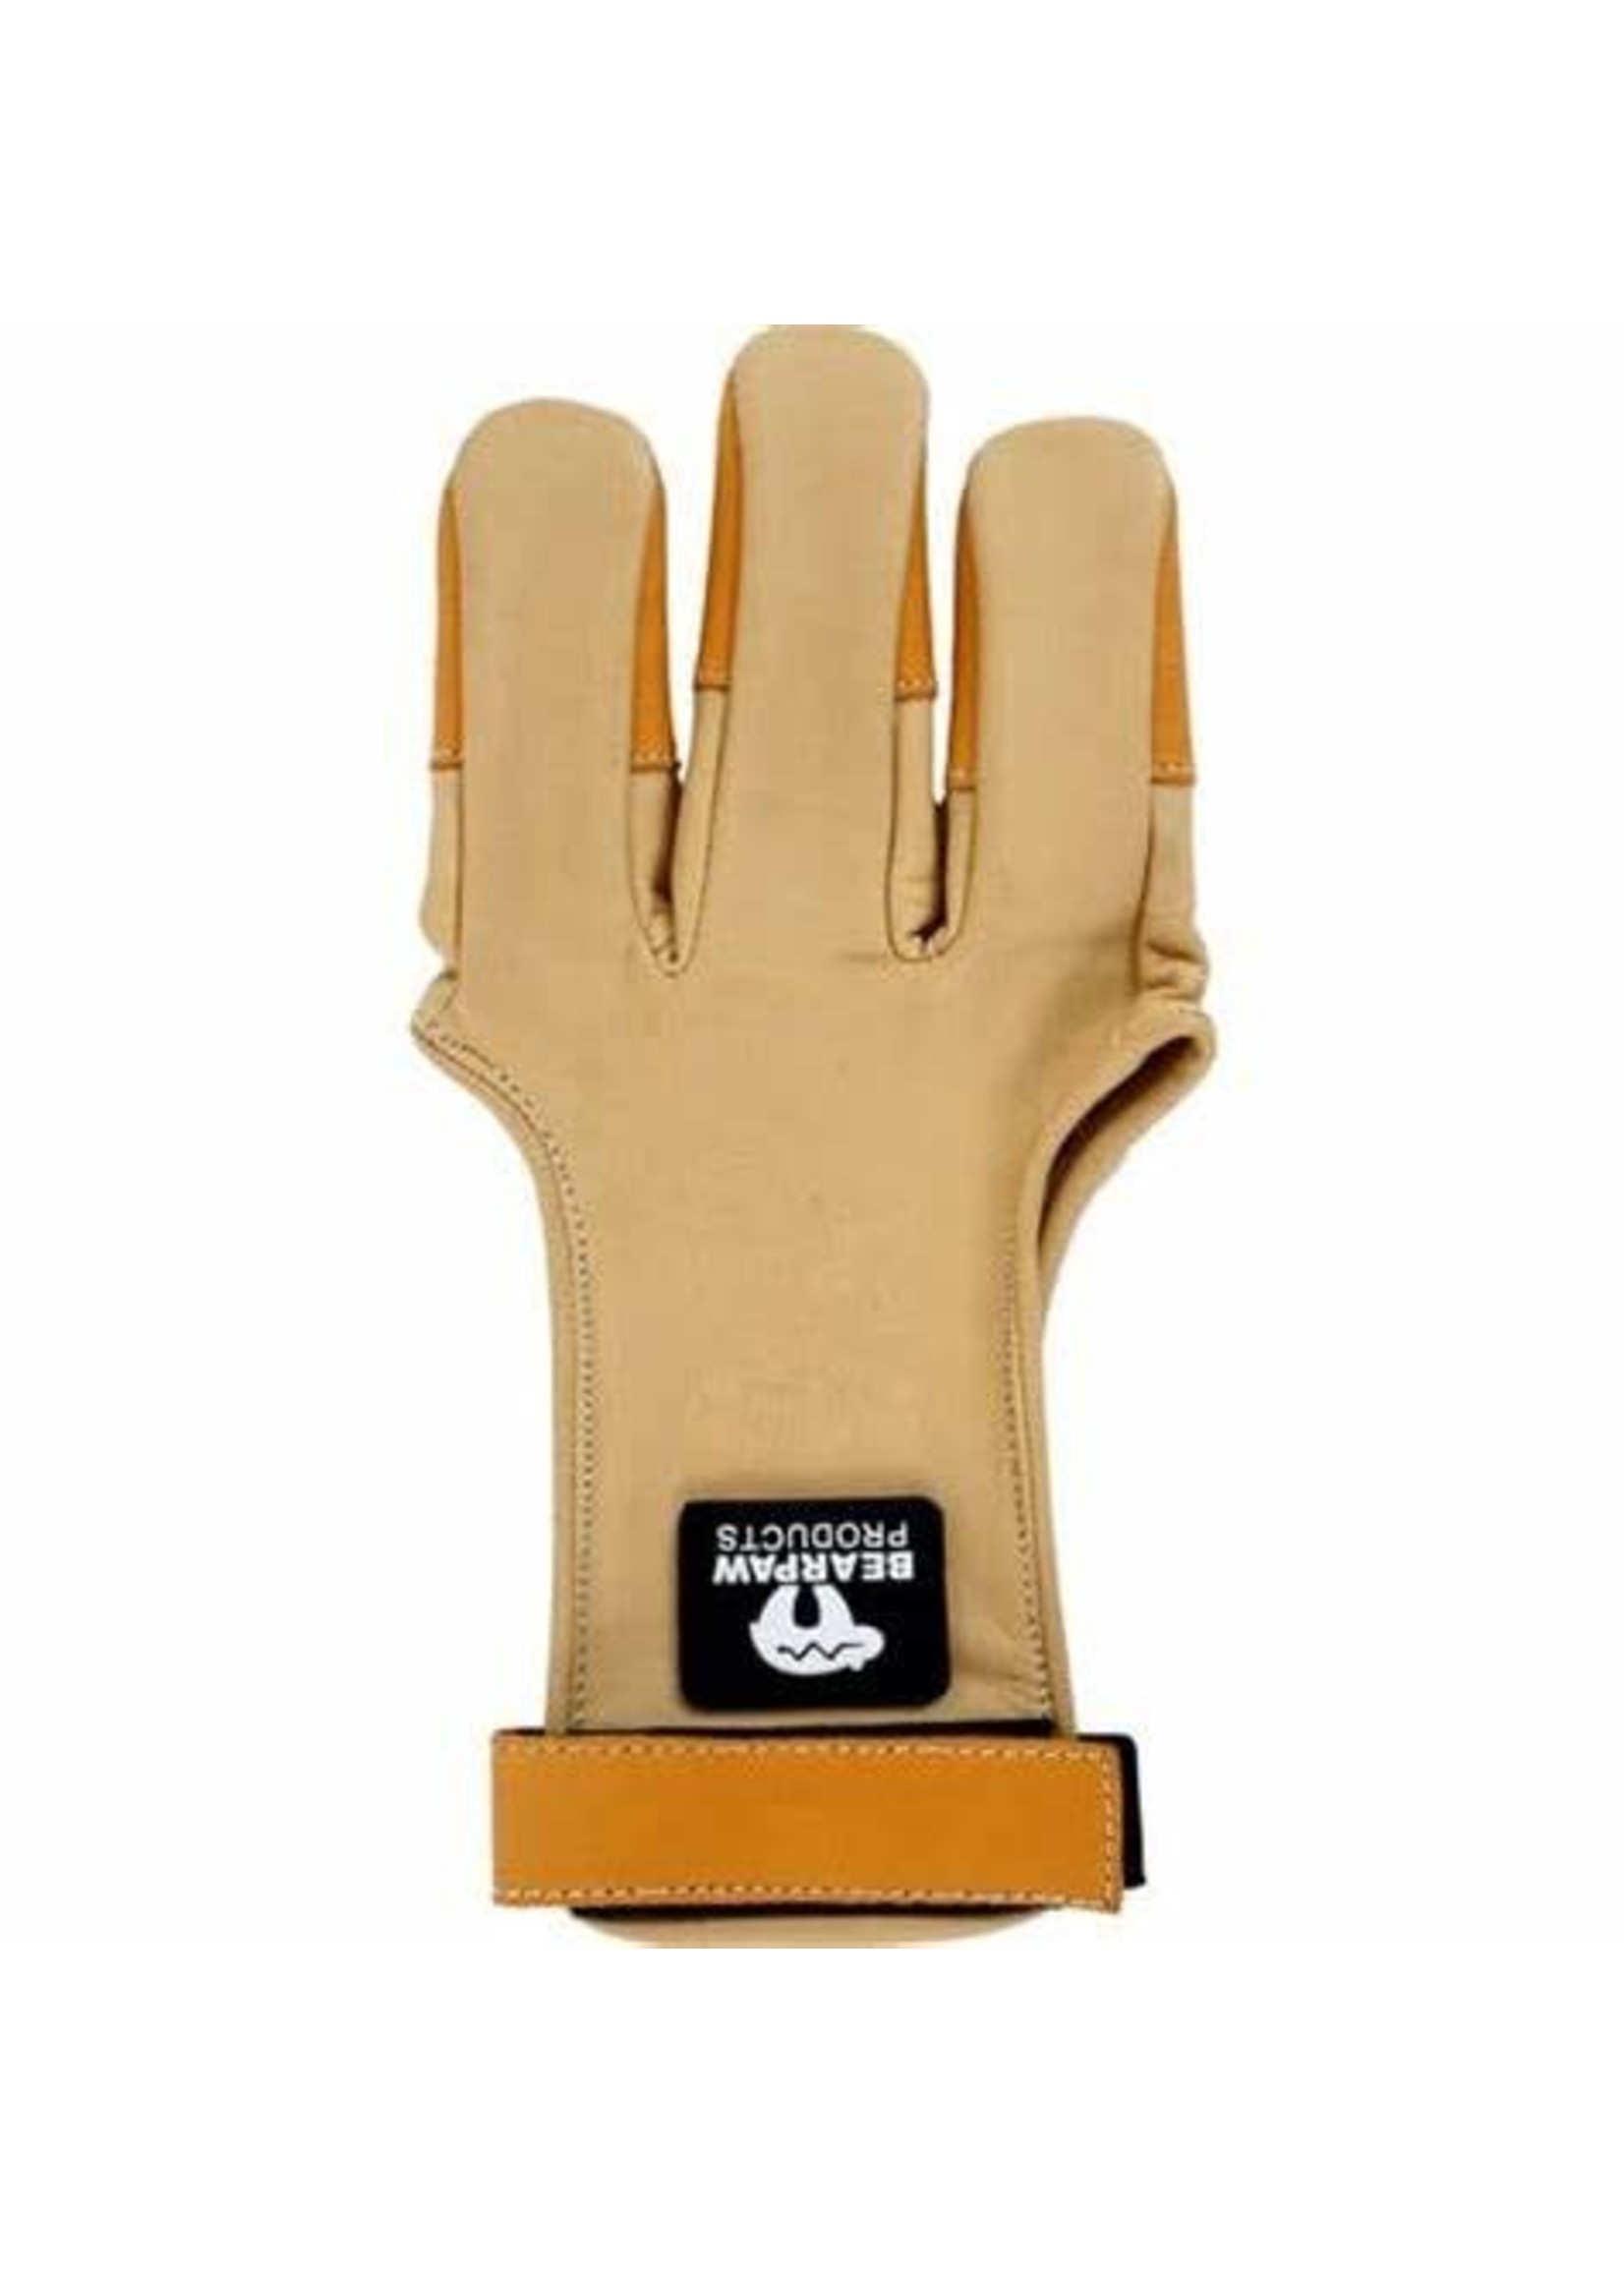 Bearpaw Leather Classic Shooting Glove